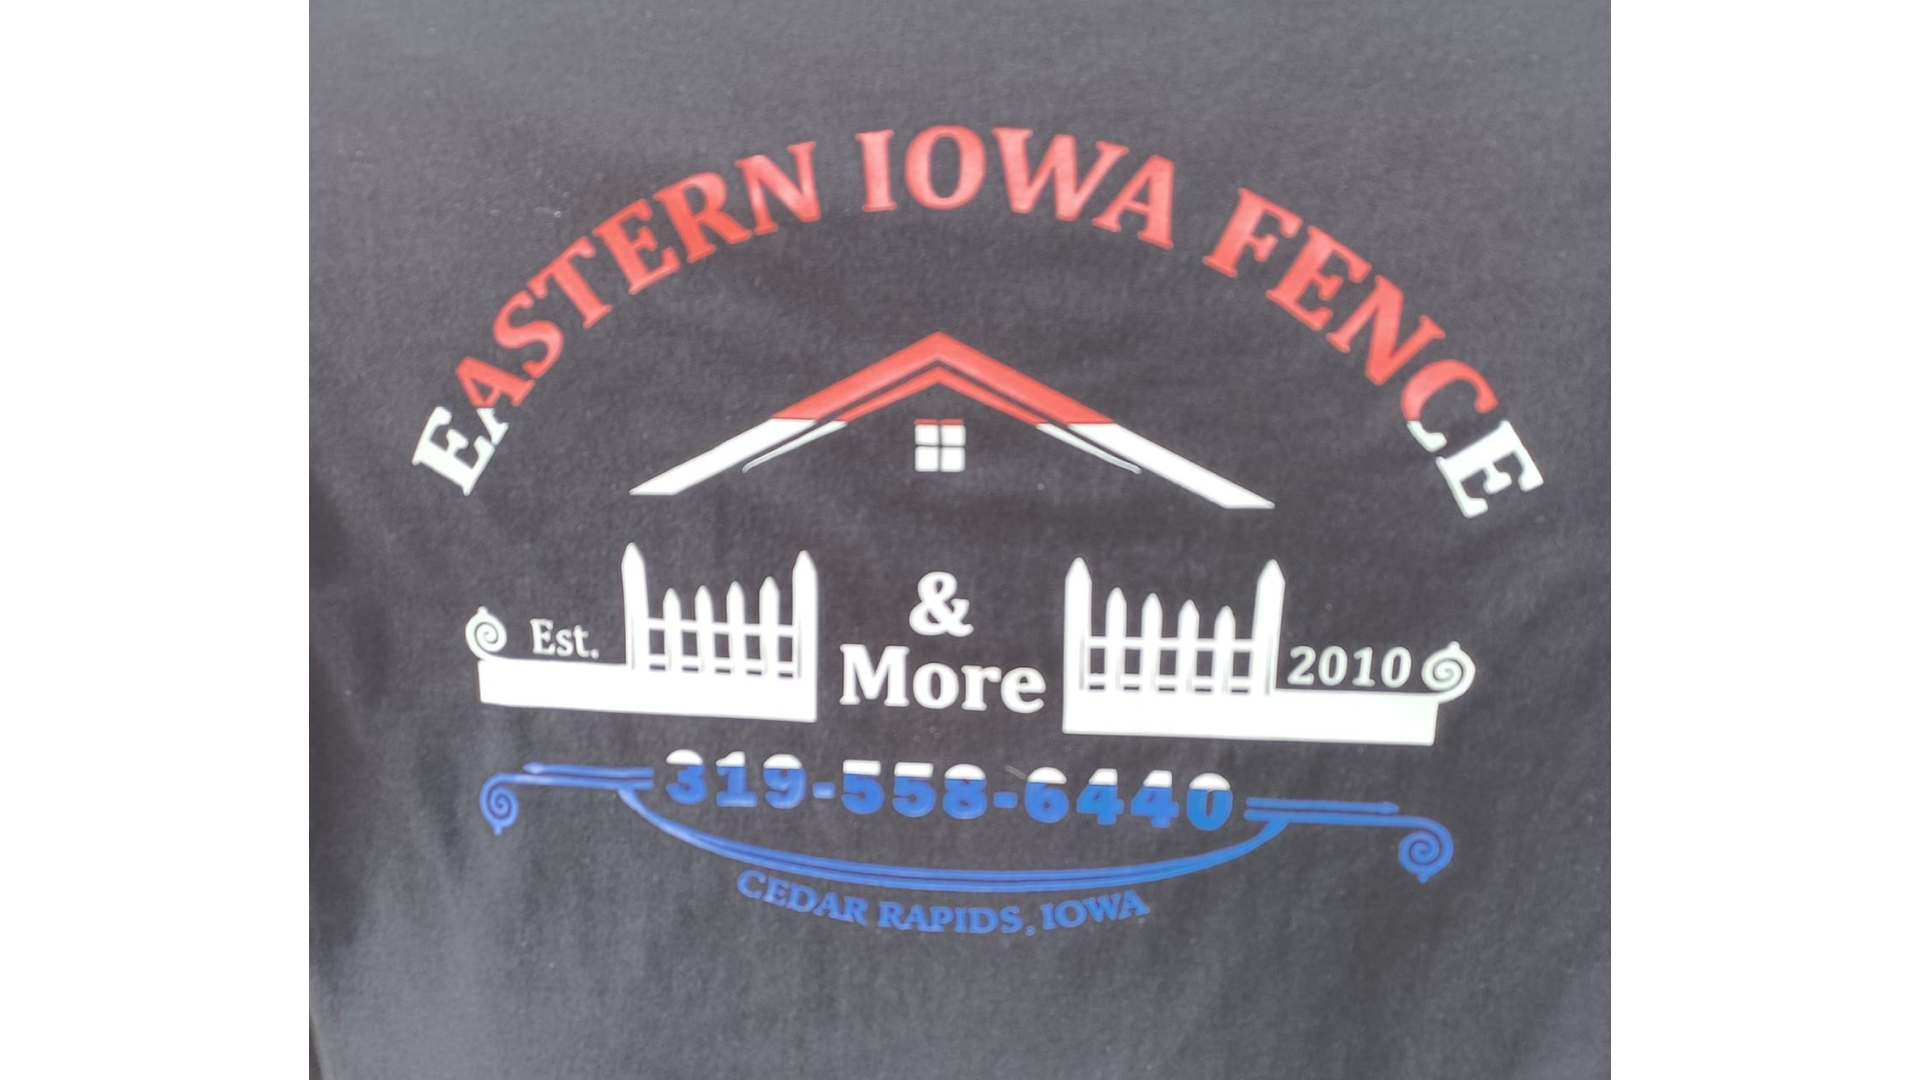 Eastern Iowa Fence & More